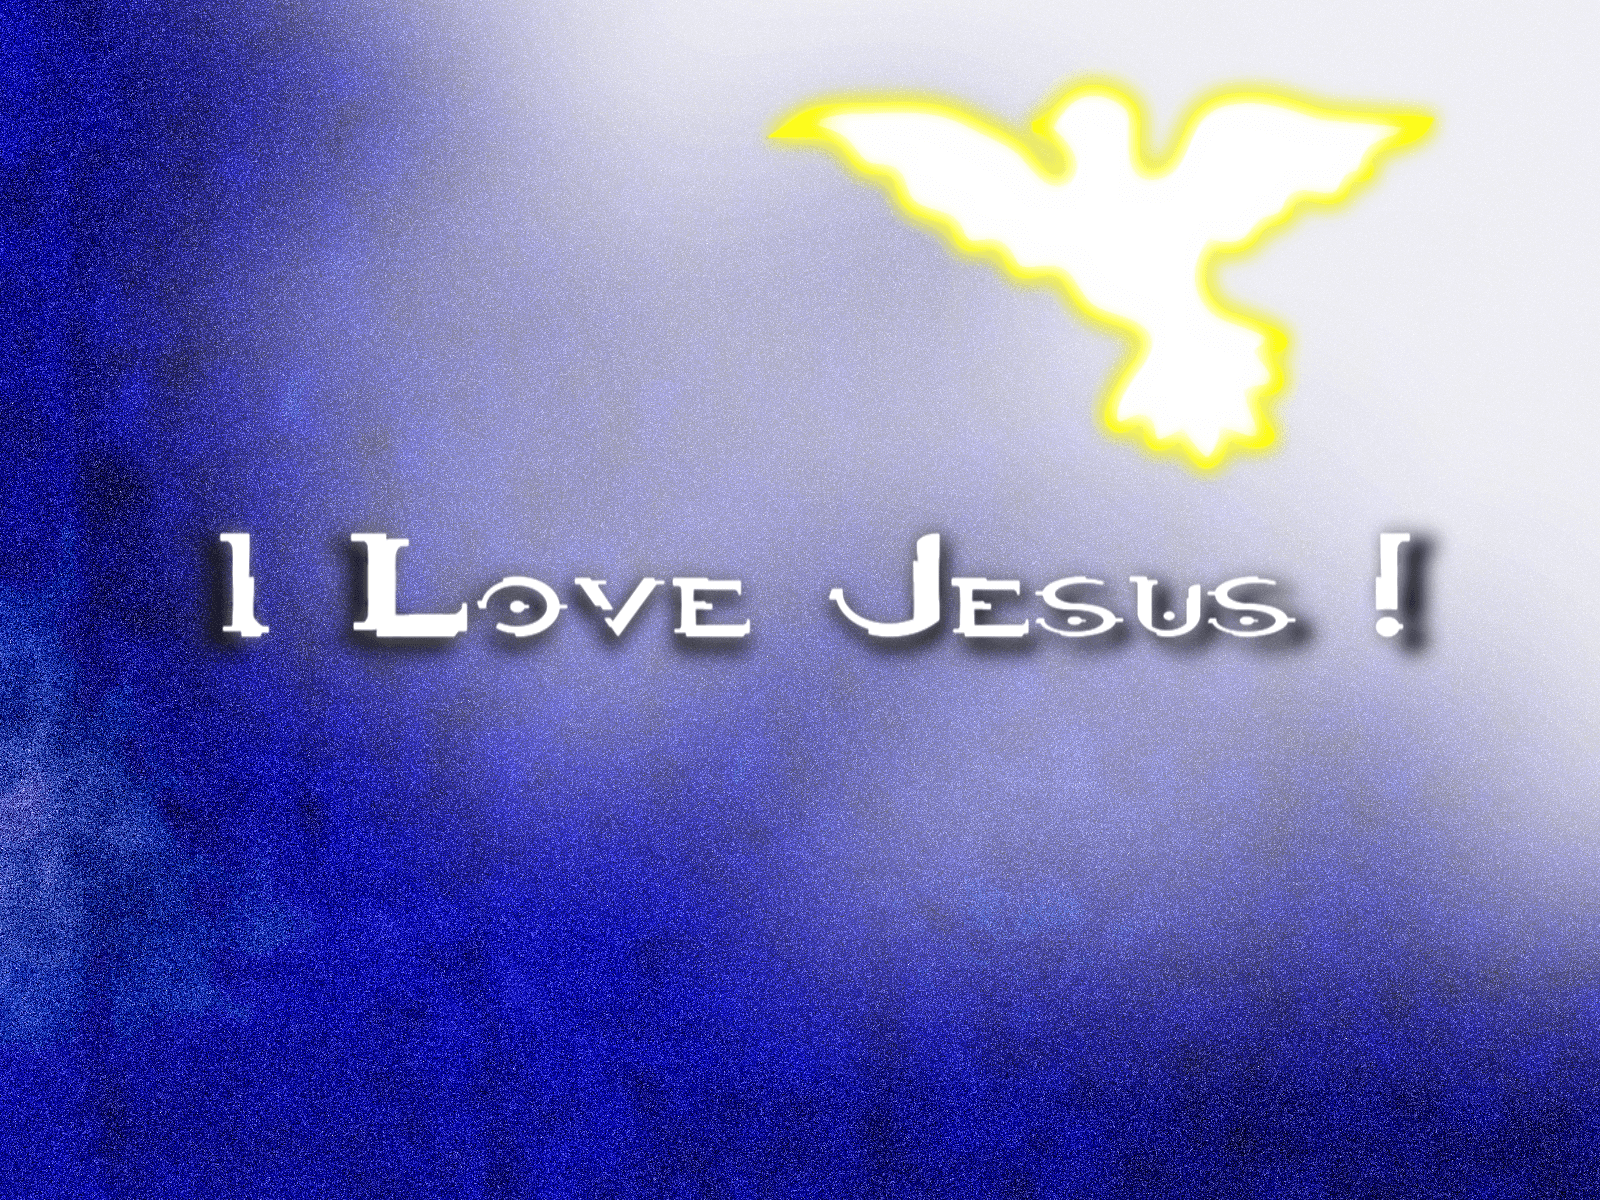 I Love You Jesus Christ. Love Jesus Wallpaper. I Love Jesus